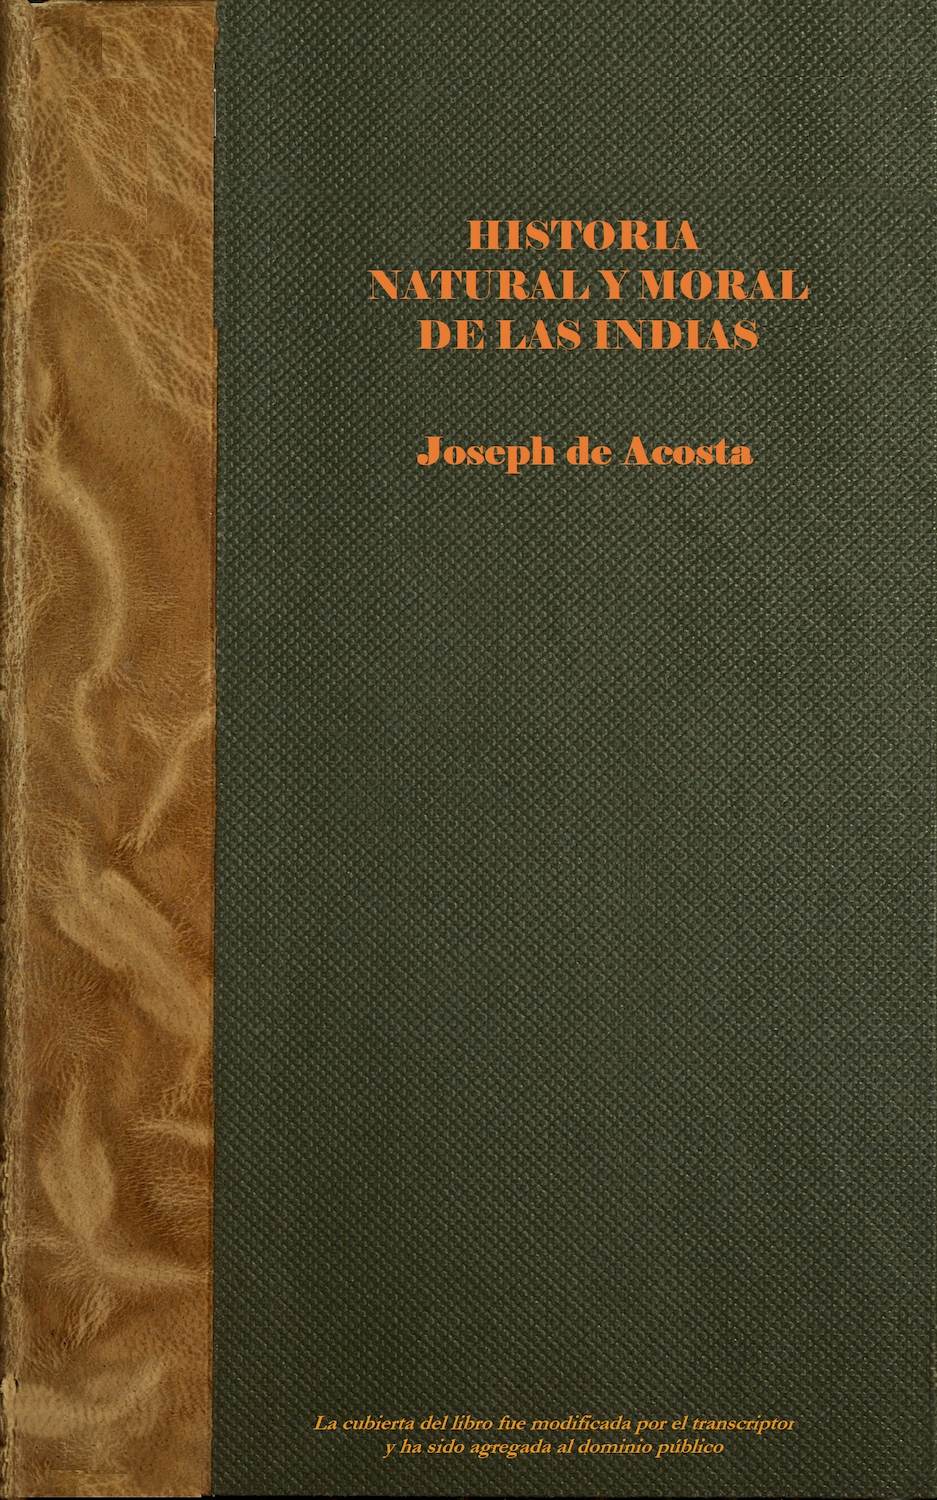 Historia natural moral de Indias , Joseph de Acosta—A Project Gutenberg eBook